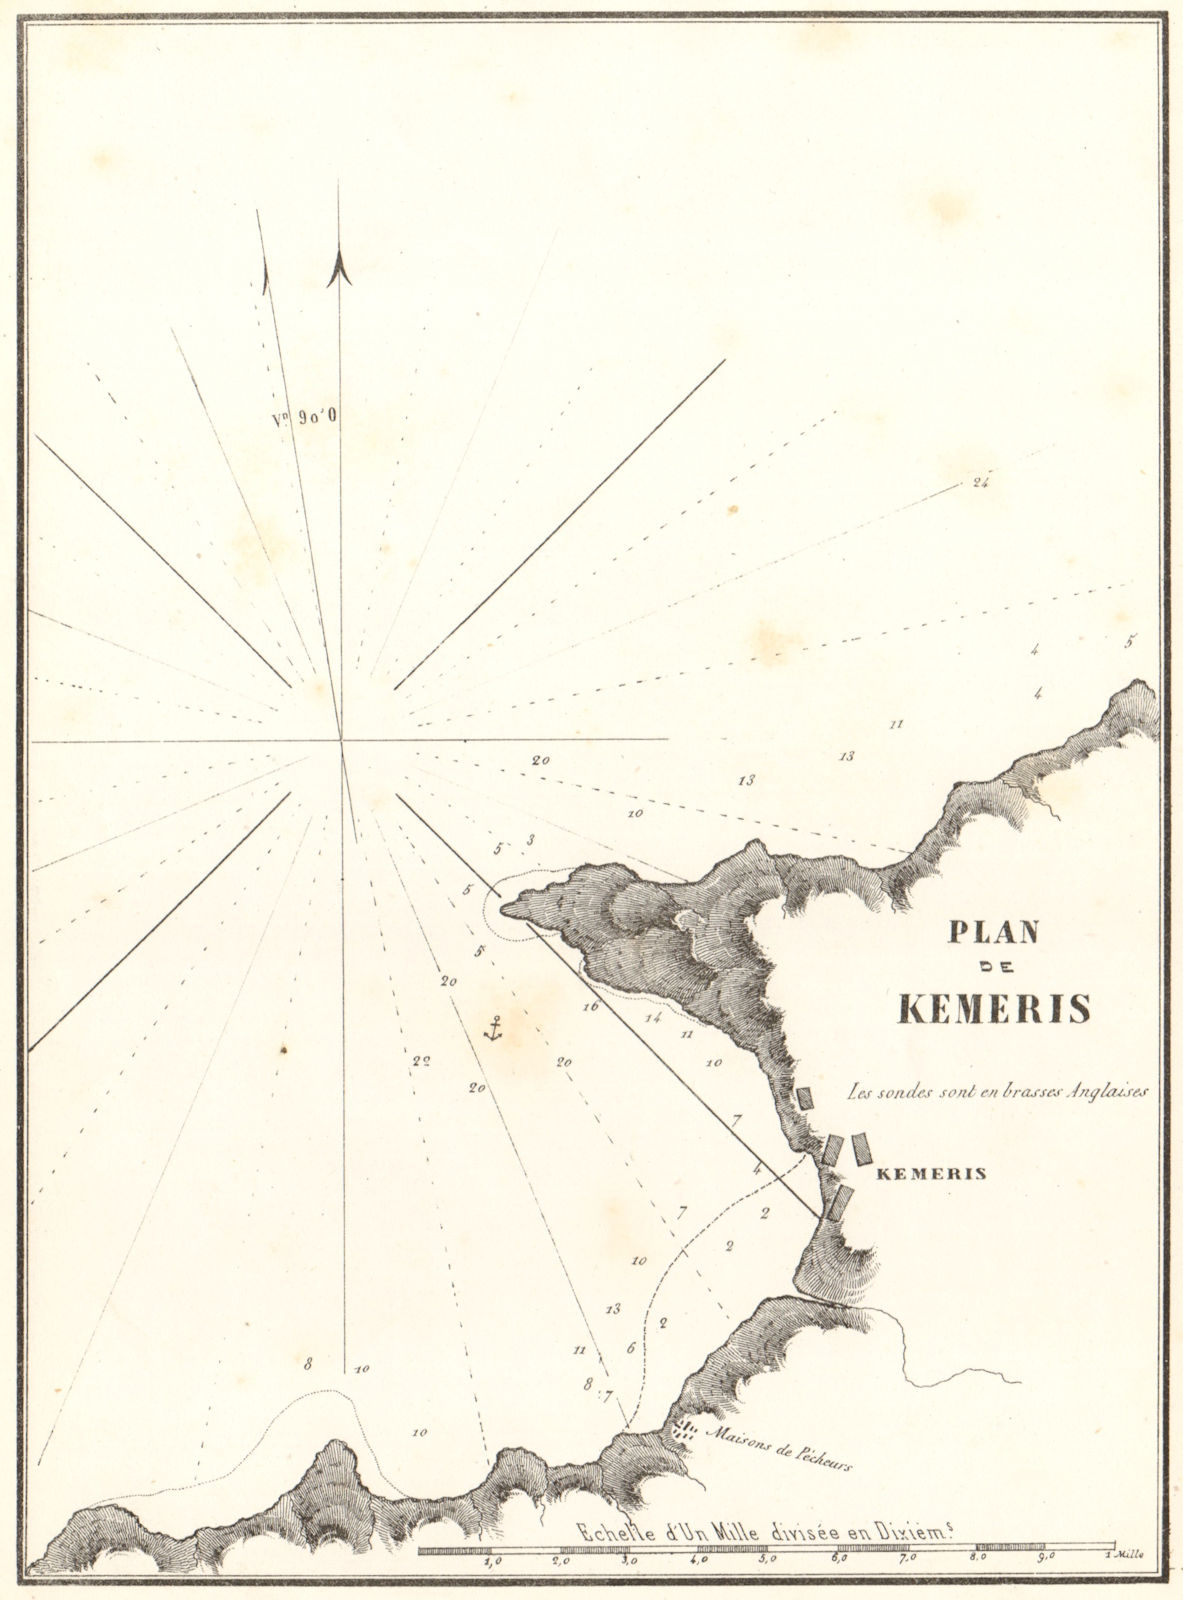 Plan of Kemeris [probably Kemer]. 'Plan de Kemeris'. Turkey. GAUTTIER 1854 map